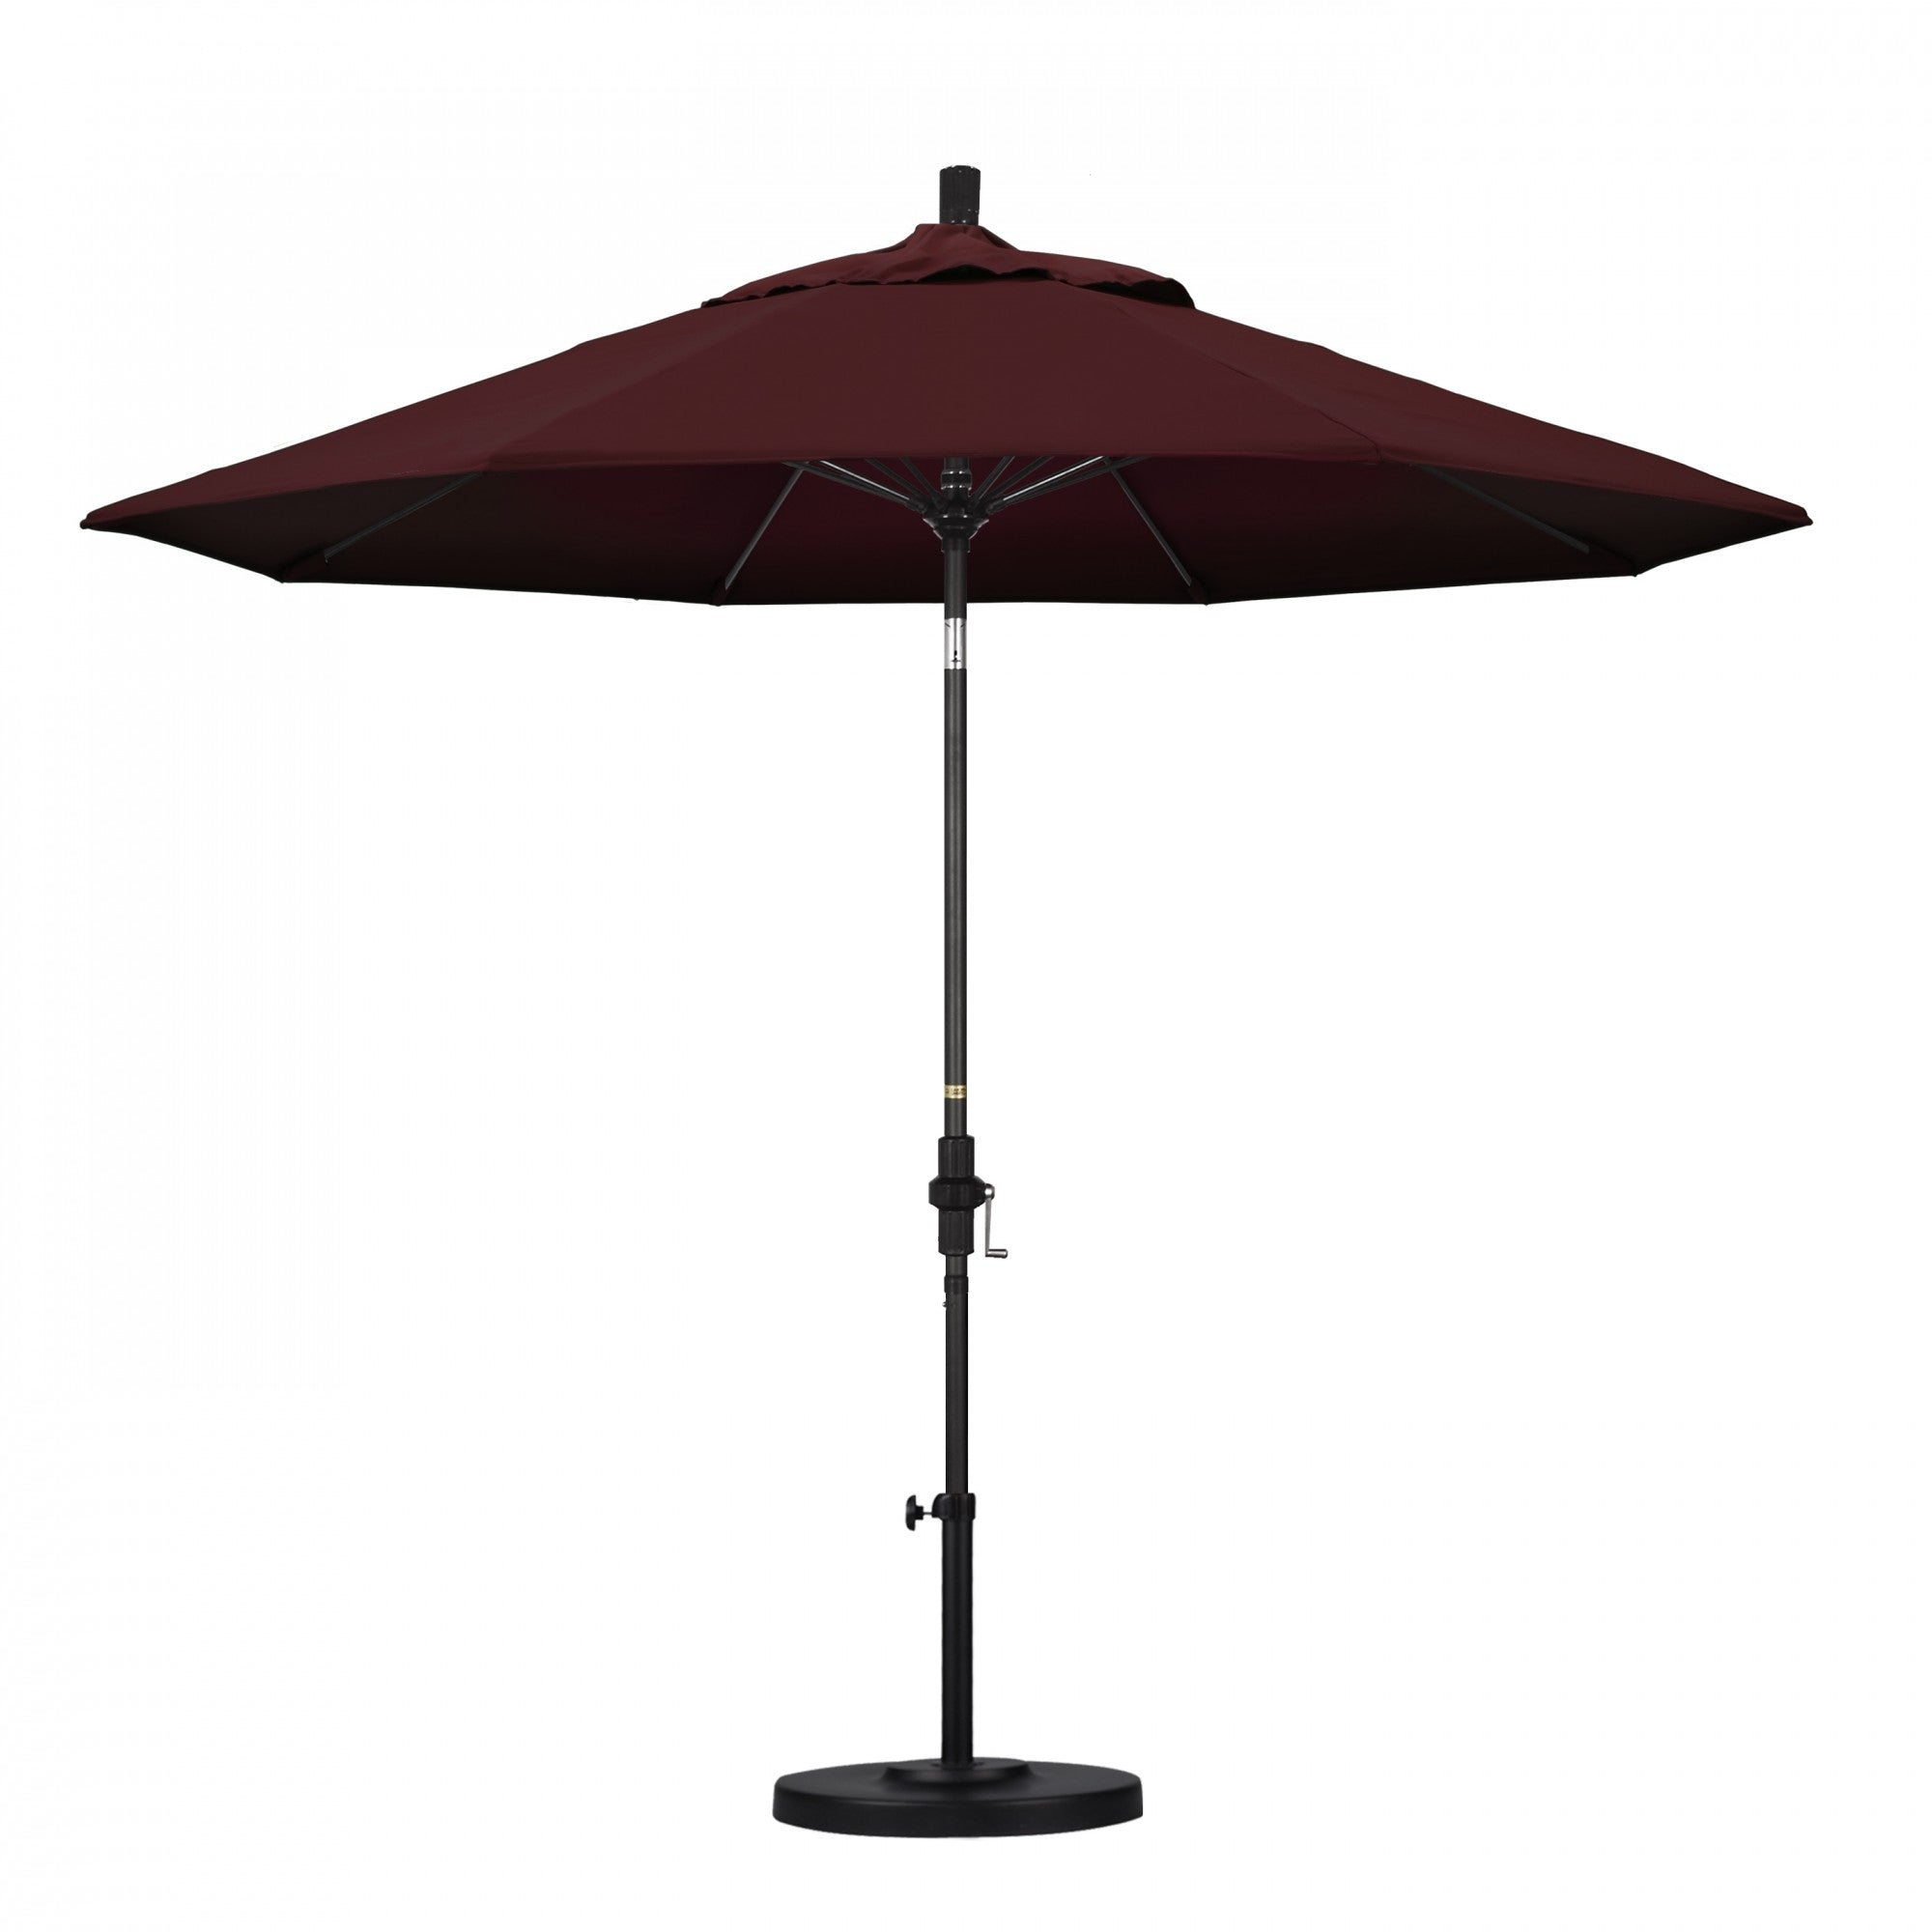 California Umbrella - 9' - Patio Umbrella Umbrella - Aluminum Pole - Burgundy - Pacifica - GSCUF908705-SA36